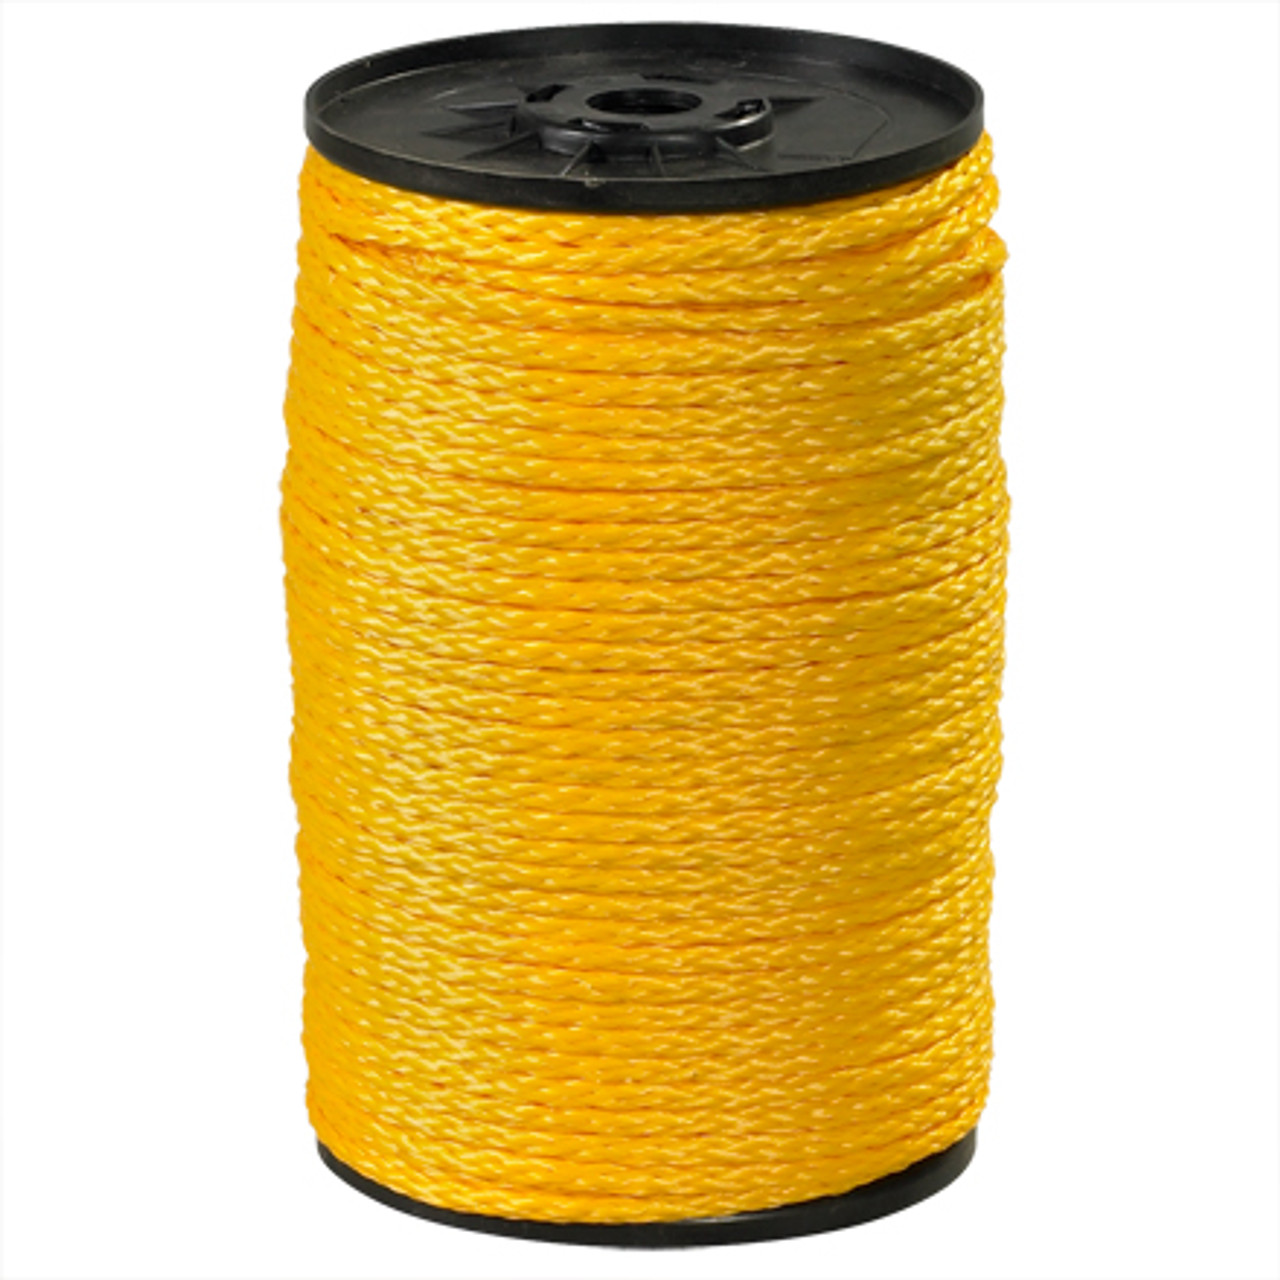 Hollow Braided Polypropylene Rope - 1/4, Yellow